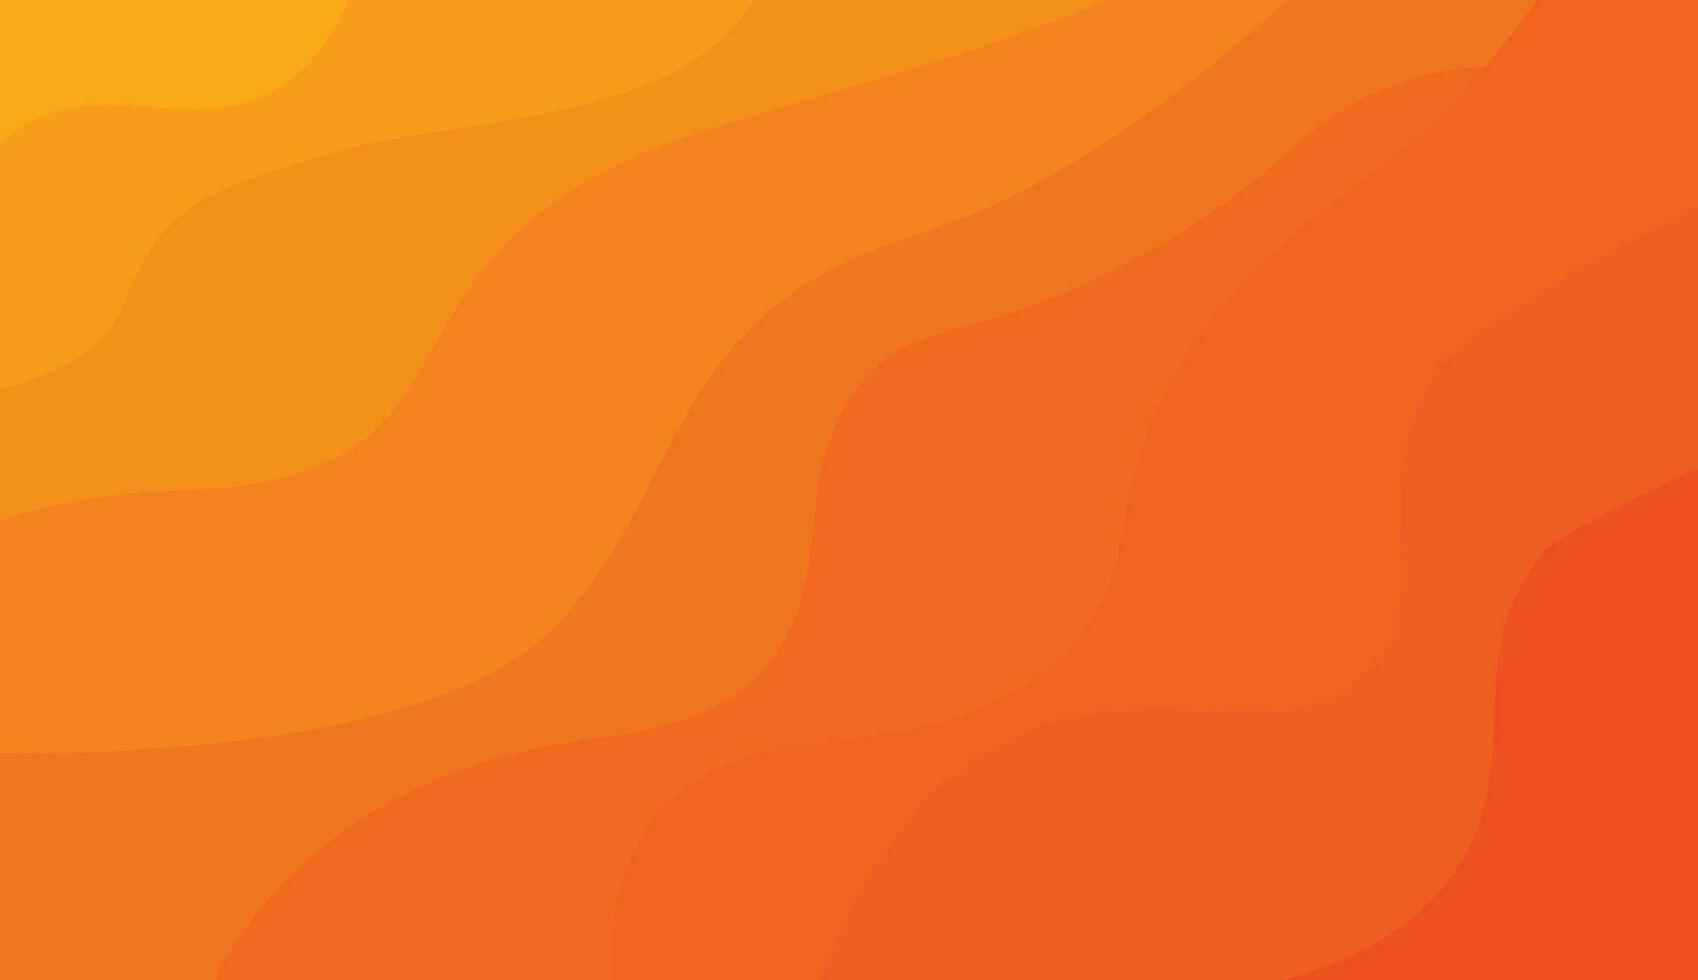 Orange abstract background, vector illustration.